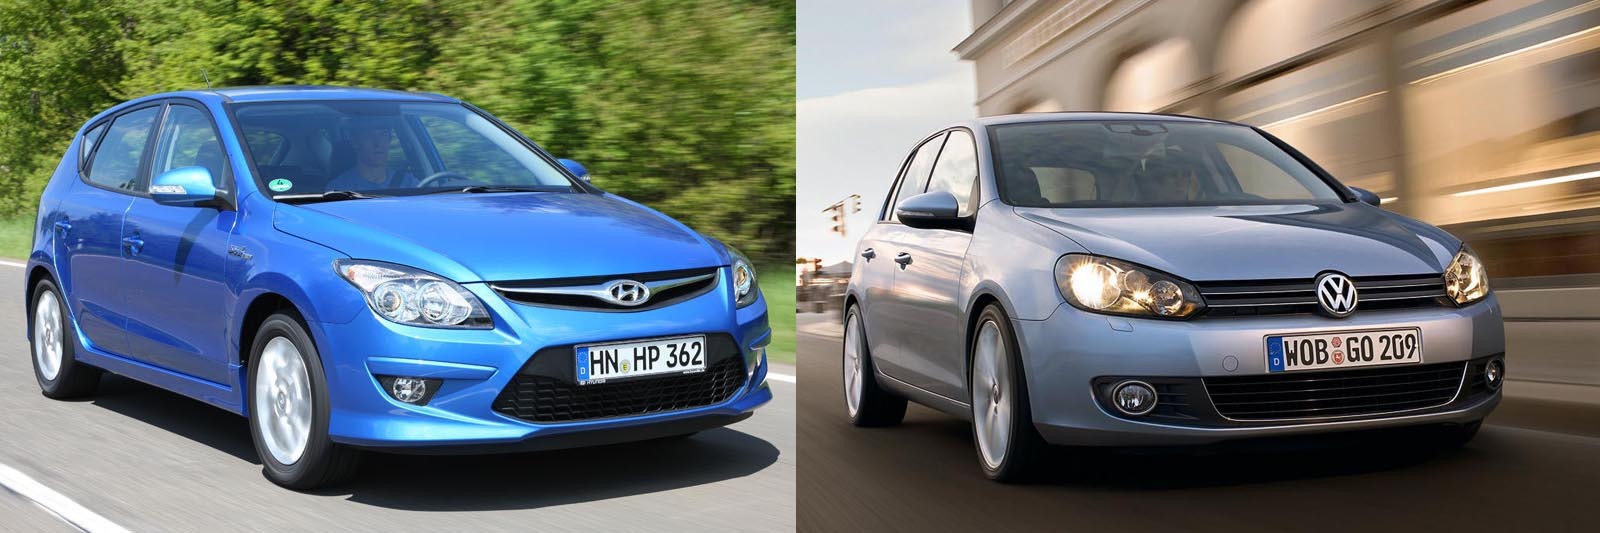 Hyundai i30 vs. Volkswagen Golf: 1 - 3. Modelul german are notorietate si mai multe atuuri